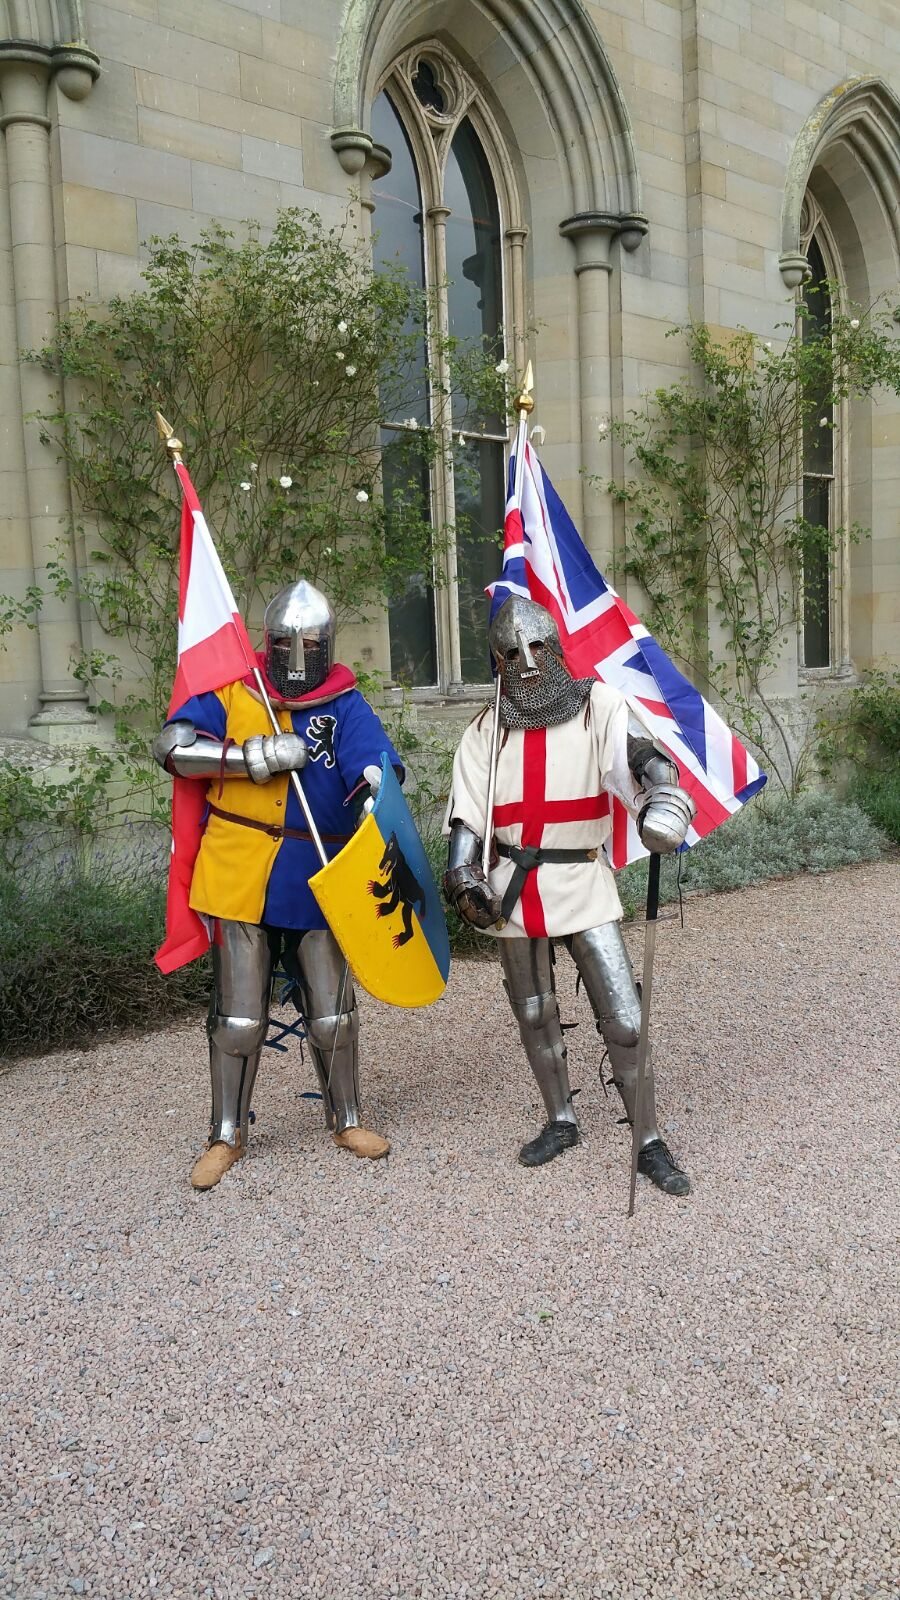 Medieval Battle for Weddings